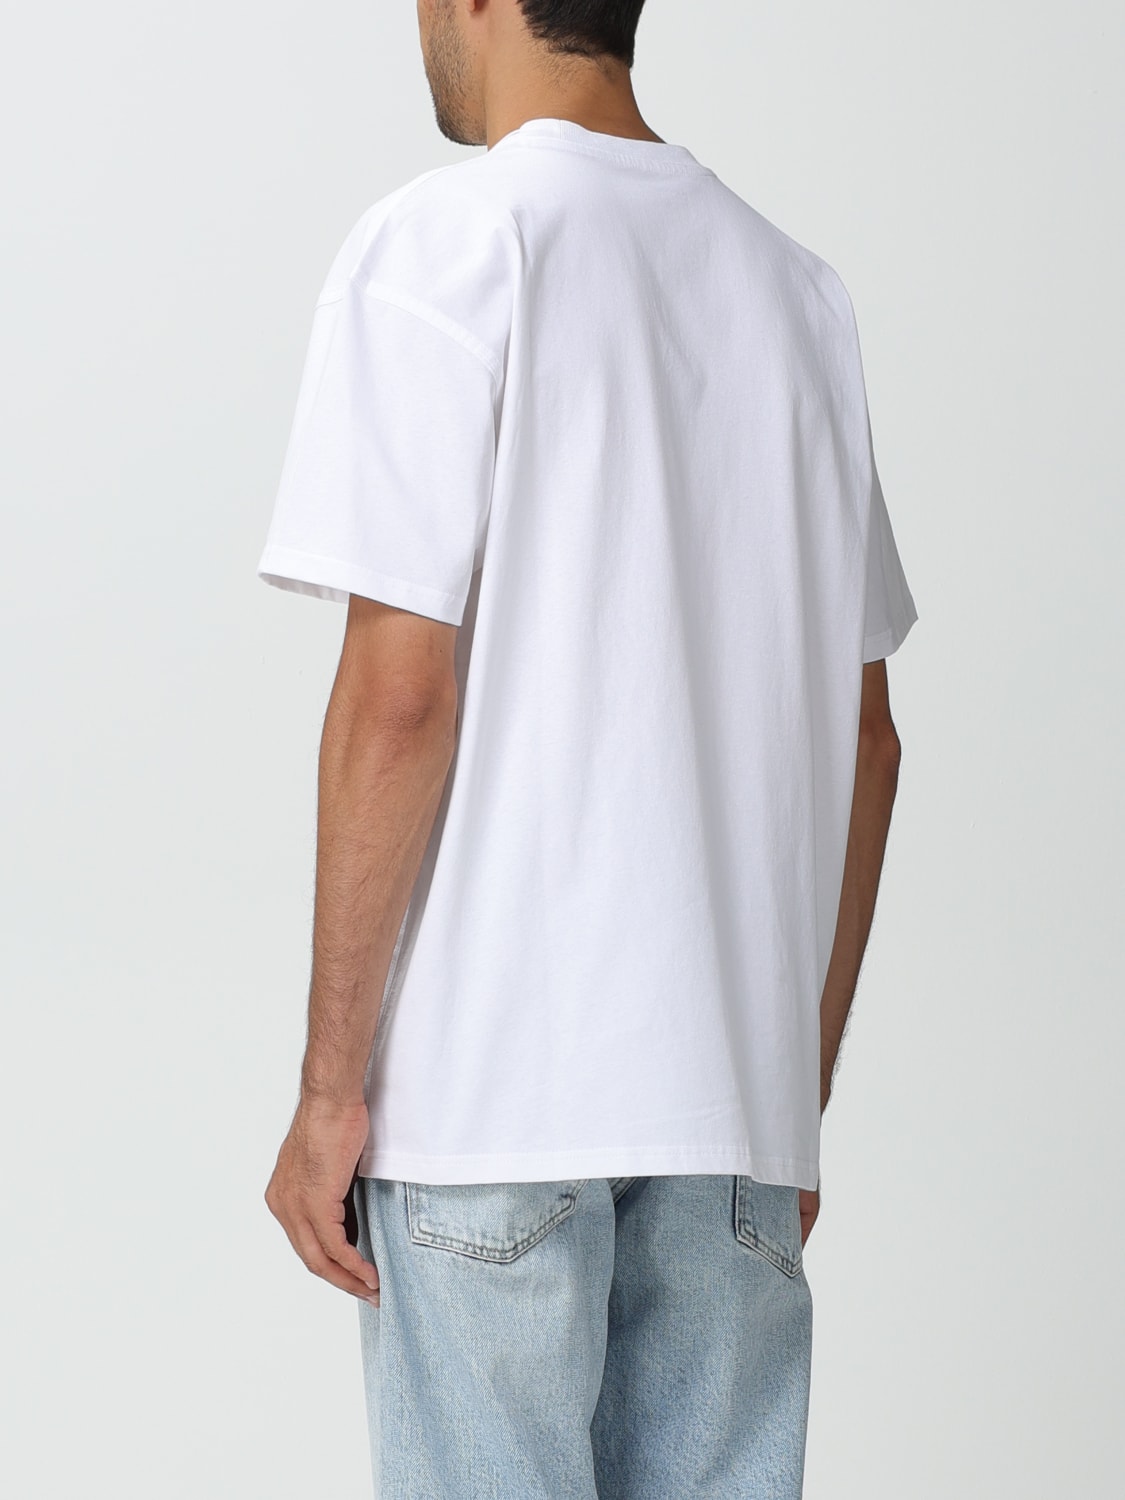 Marni x Carhartt WIP S/S Poplin Shirt Green/White